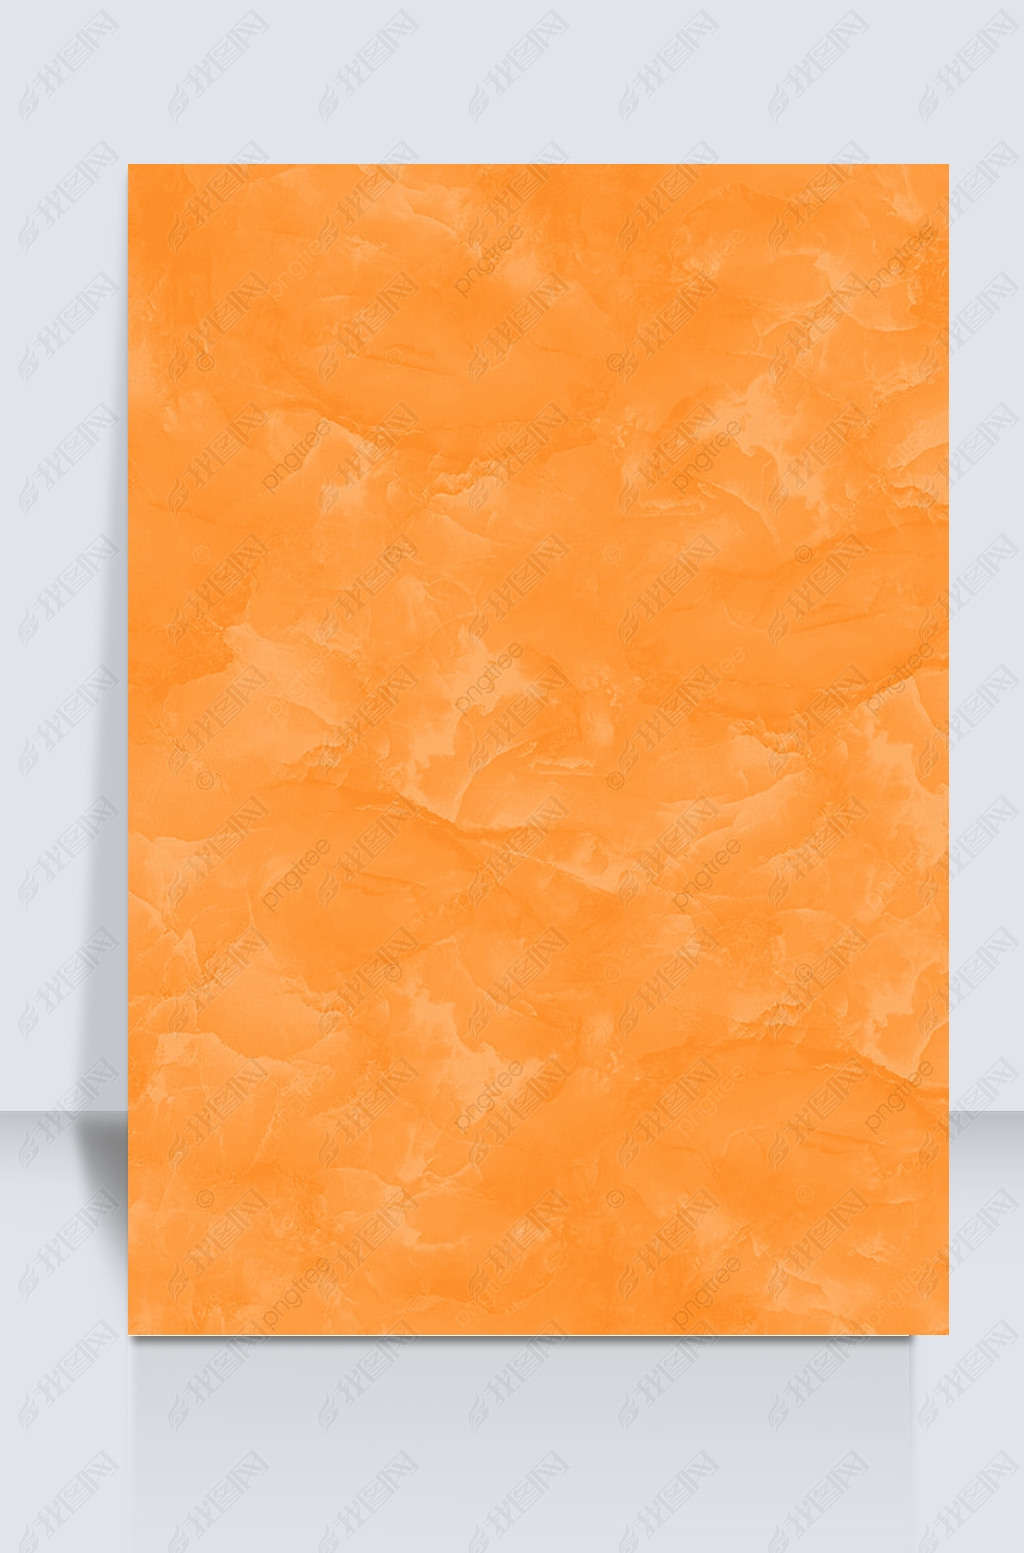 light orange background marble texture